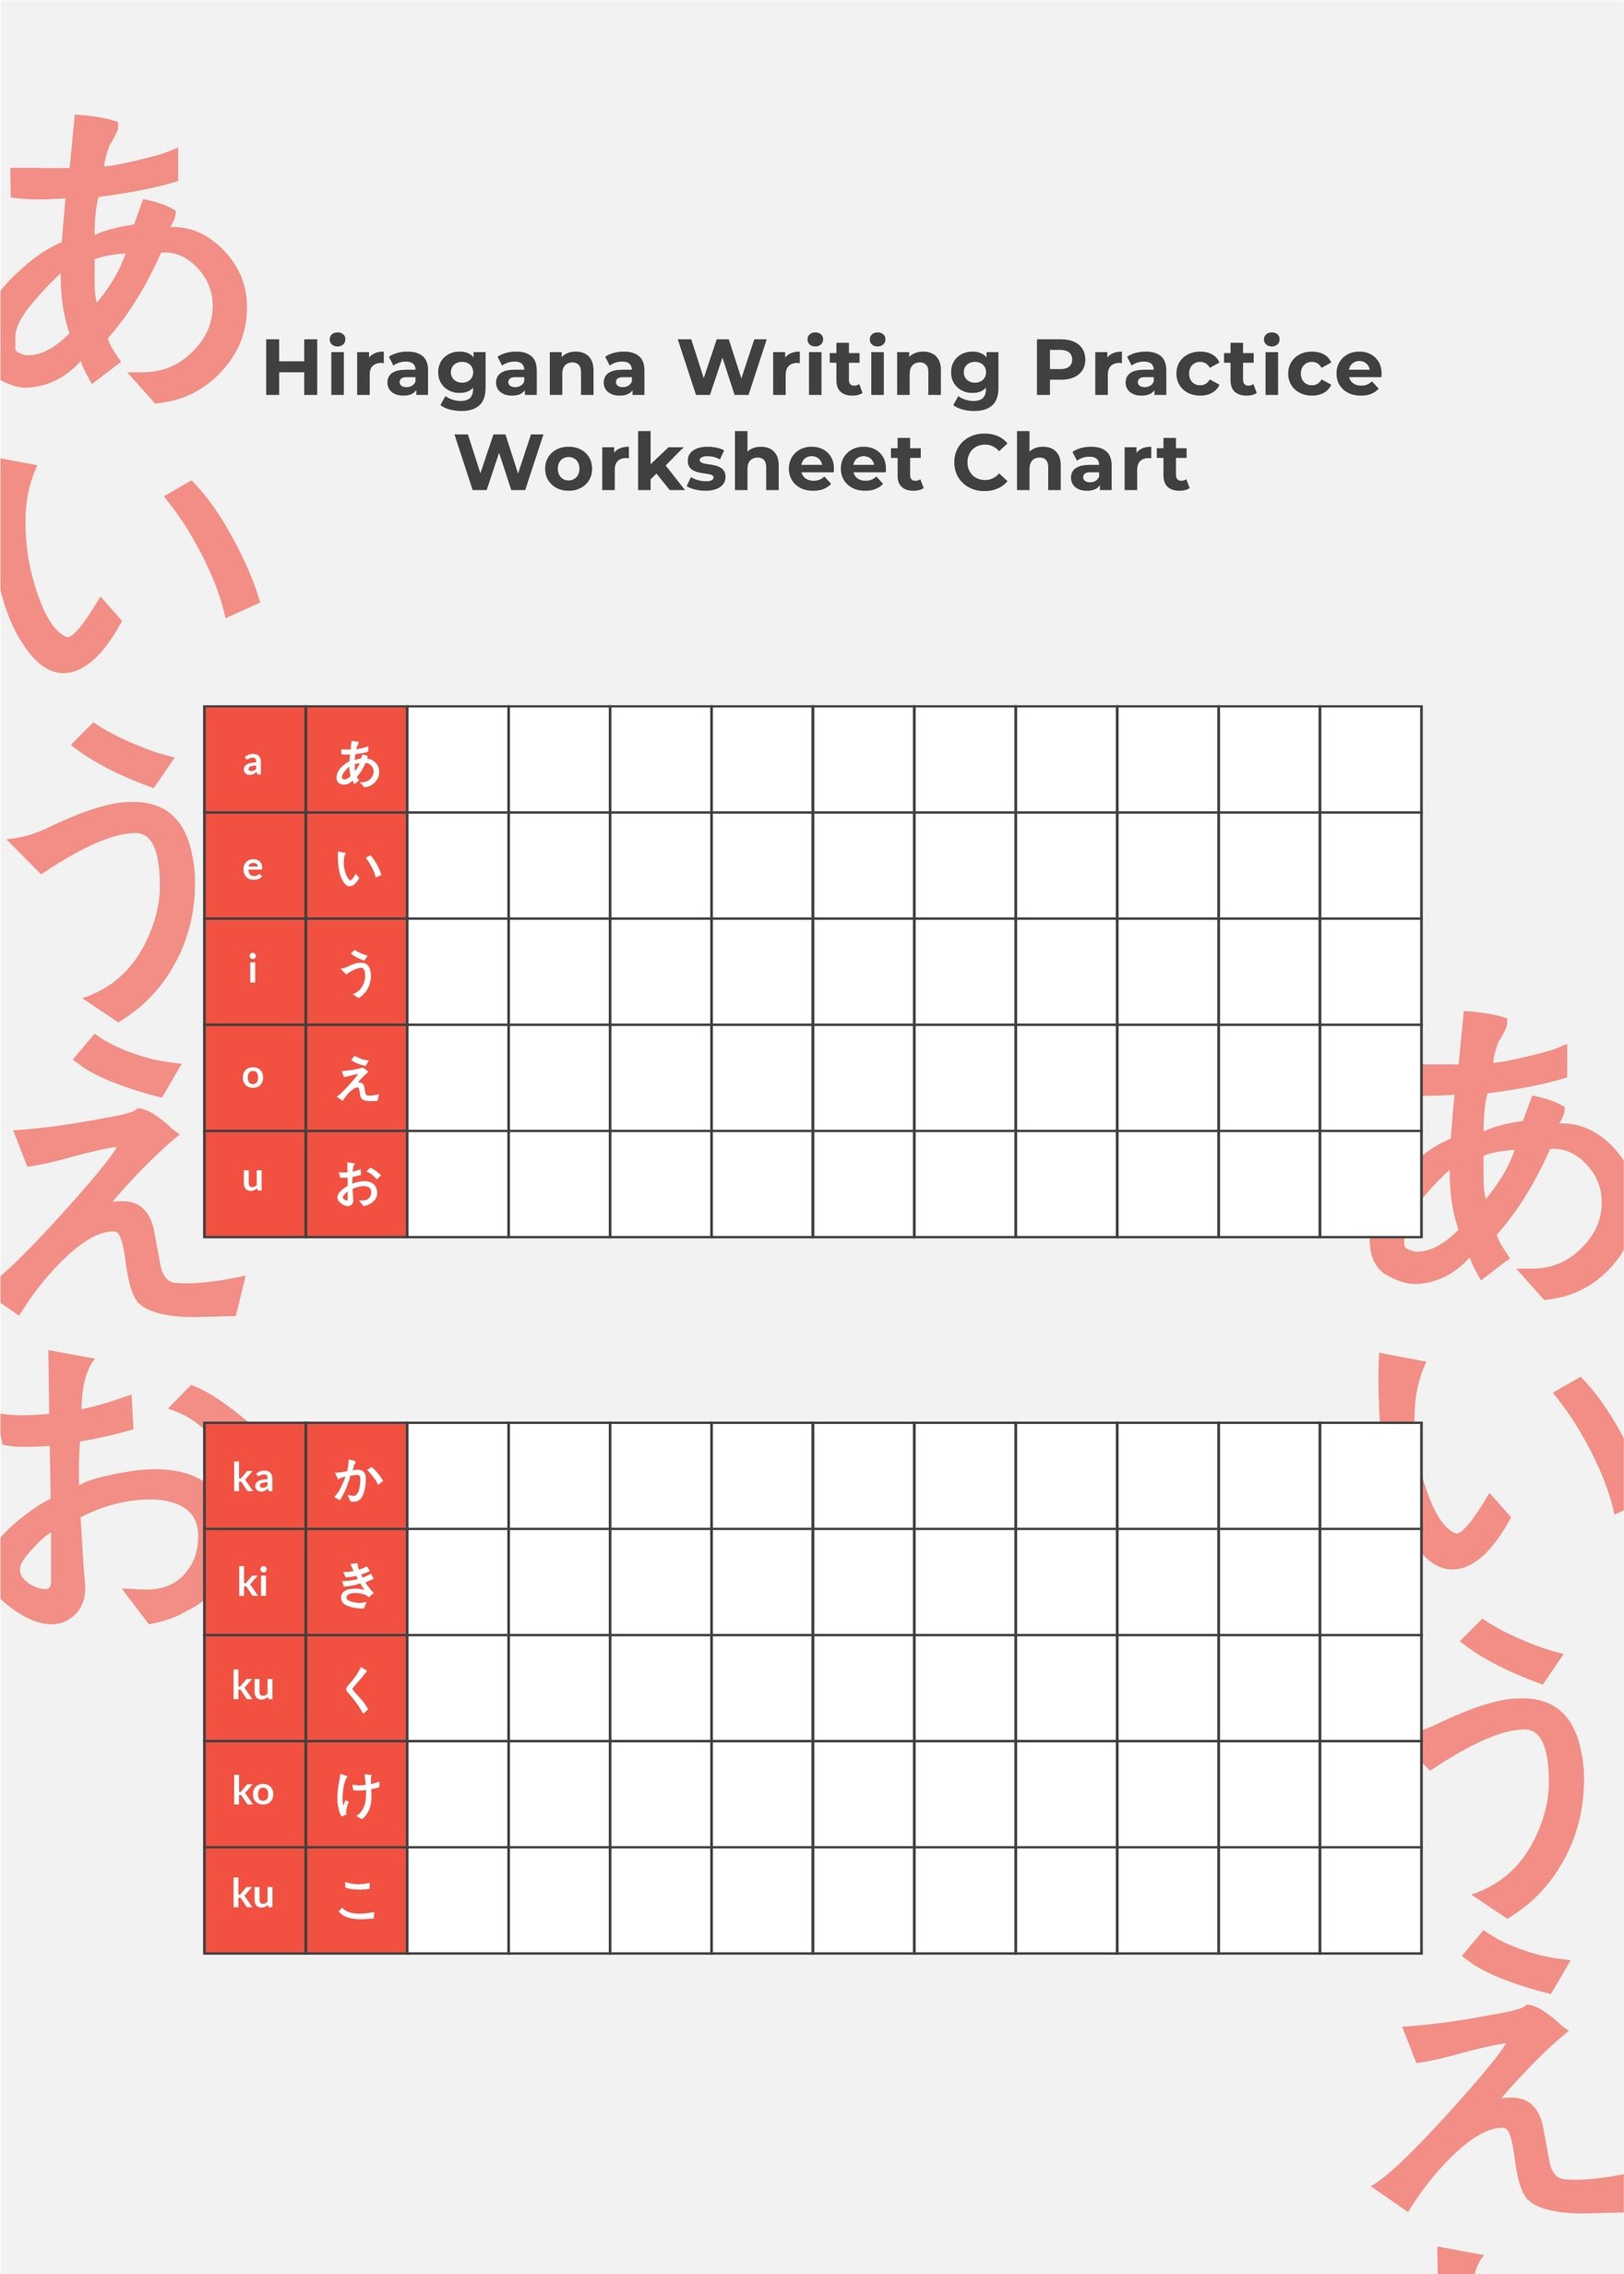 Hiragana Writing Practice Worksheet Chart In Illustrator PDF